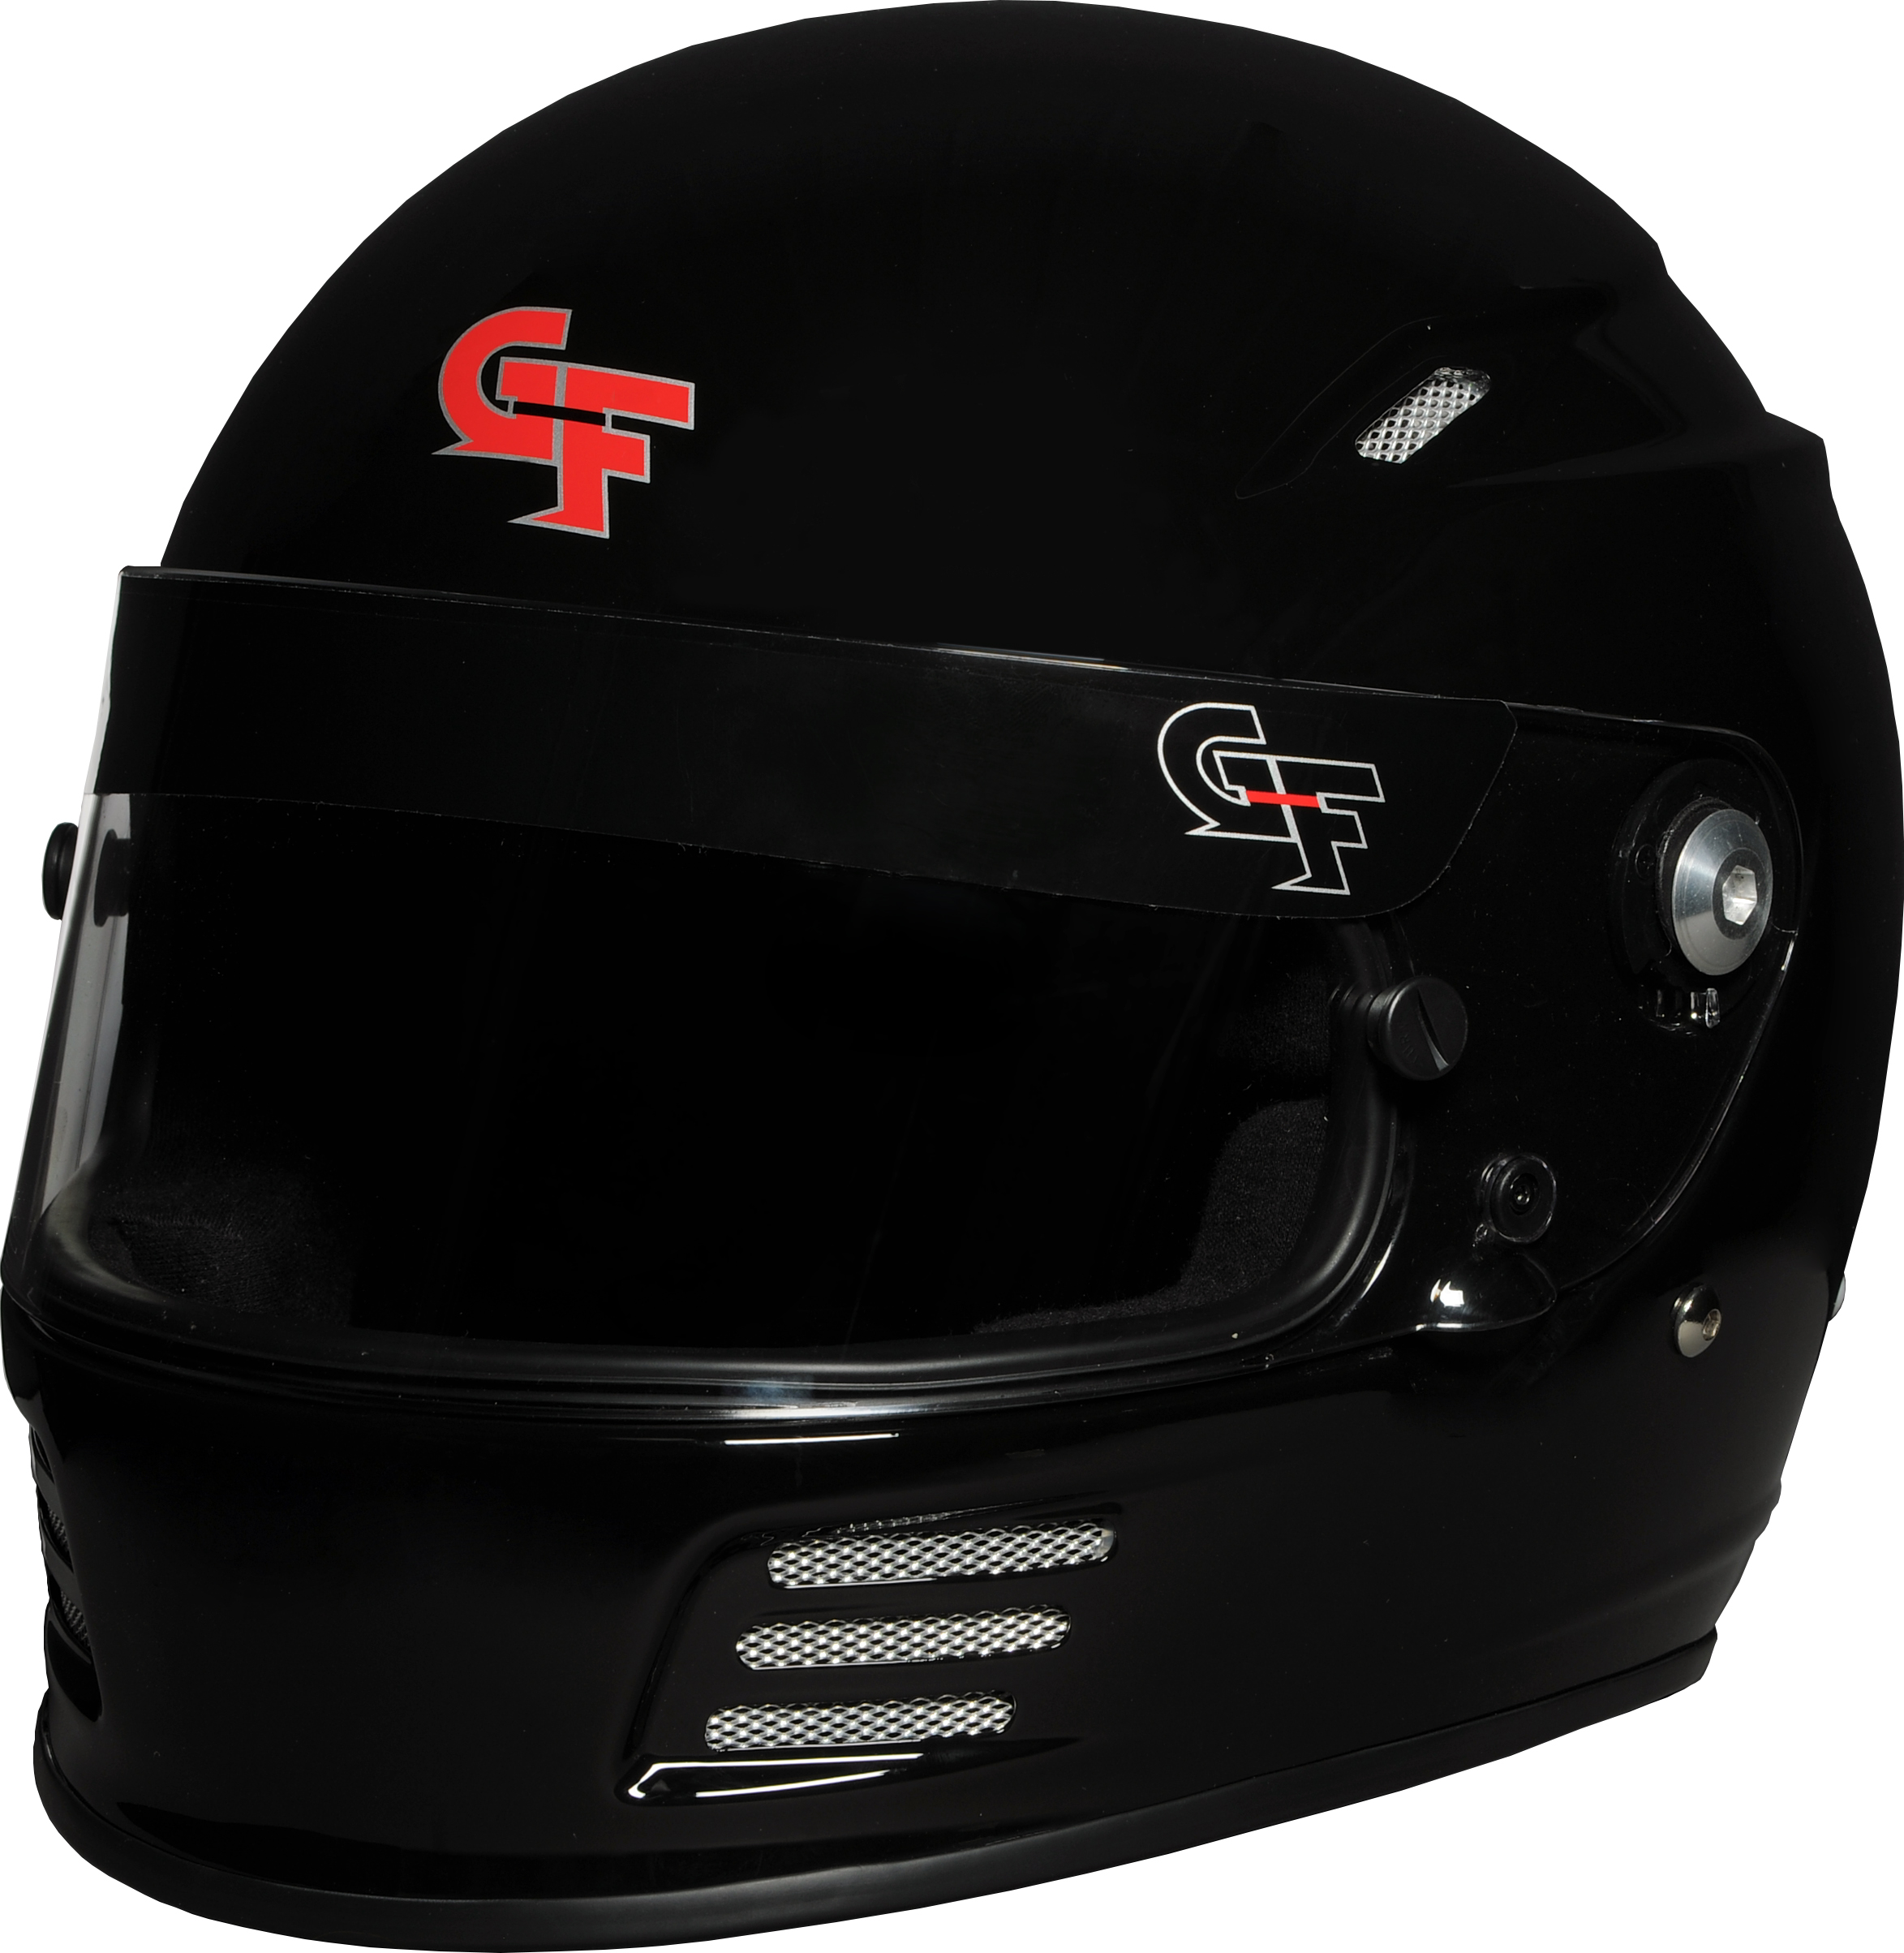 G-Force Racing Gear Helmet, EX9 FULL FACE XX-LARGE BLACK SA15